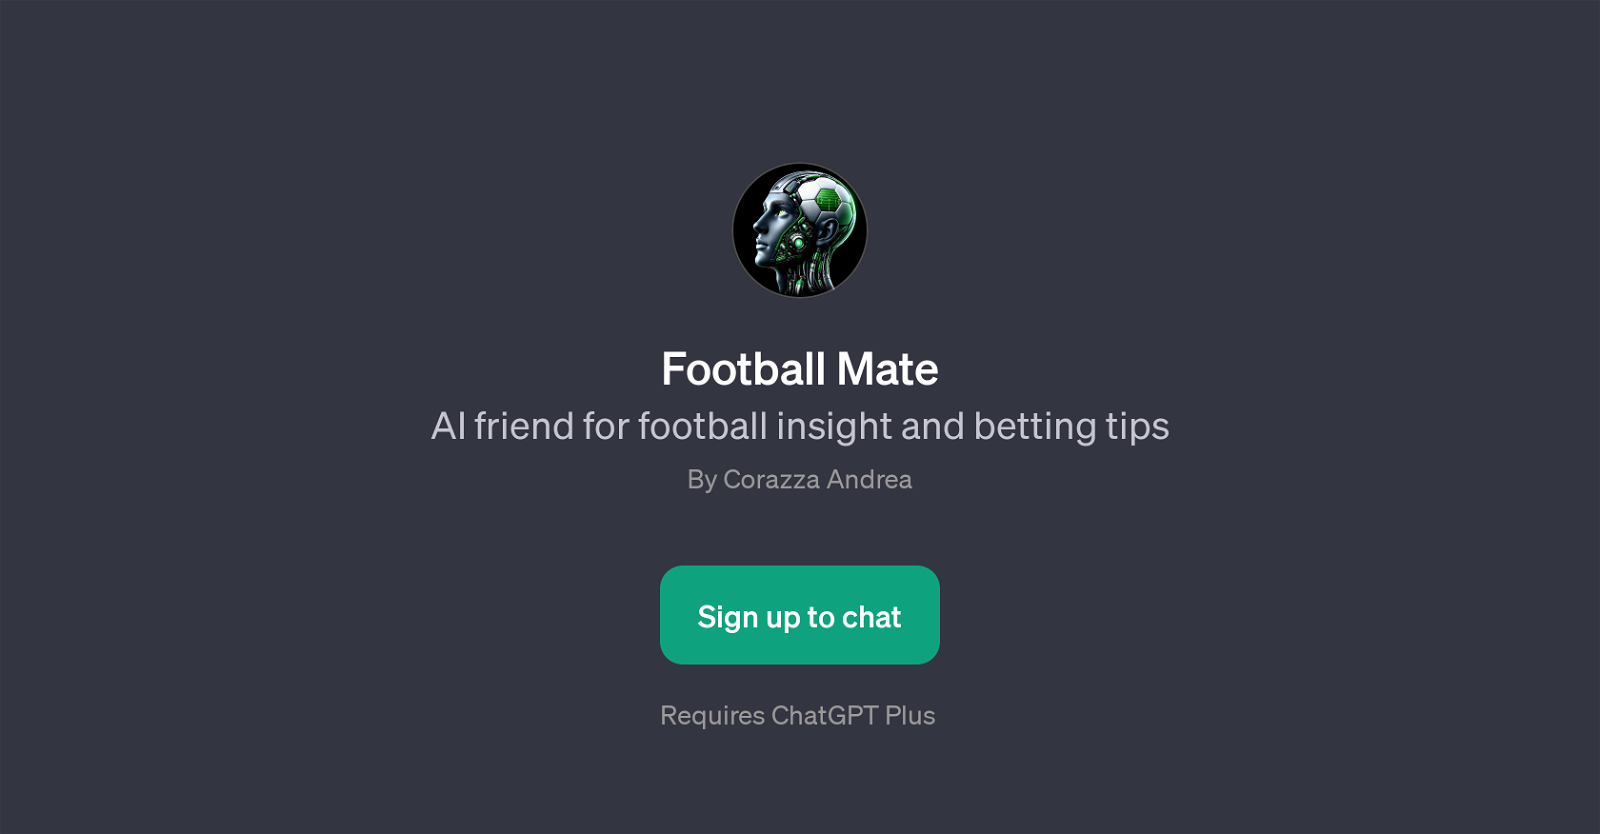 Football Mate website